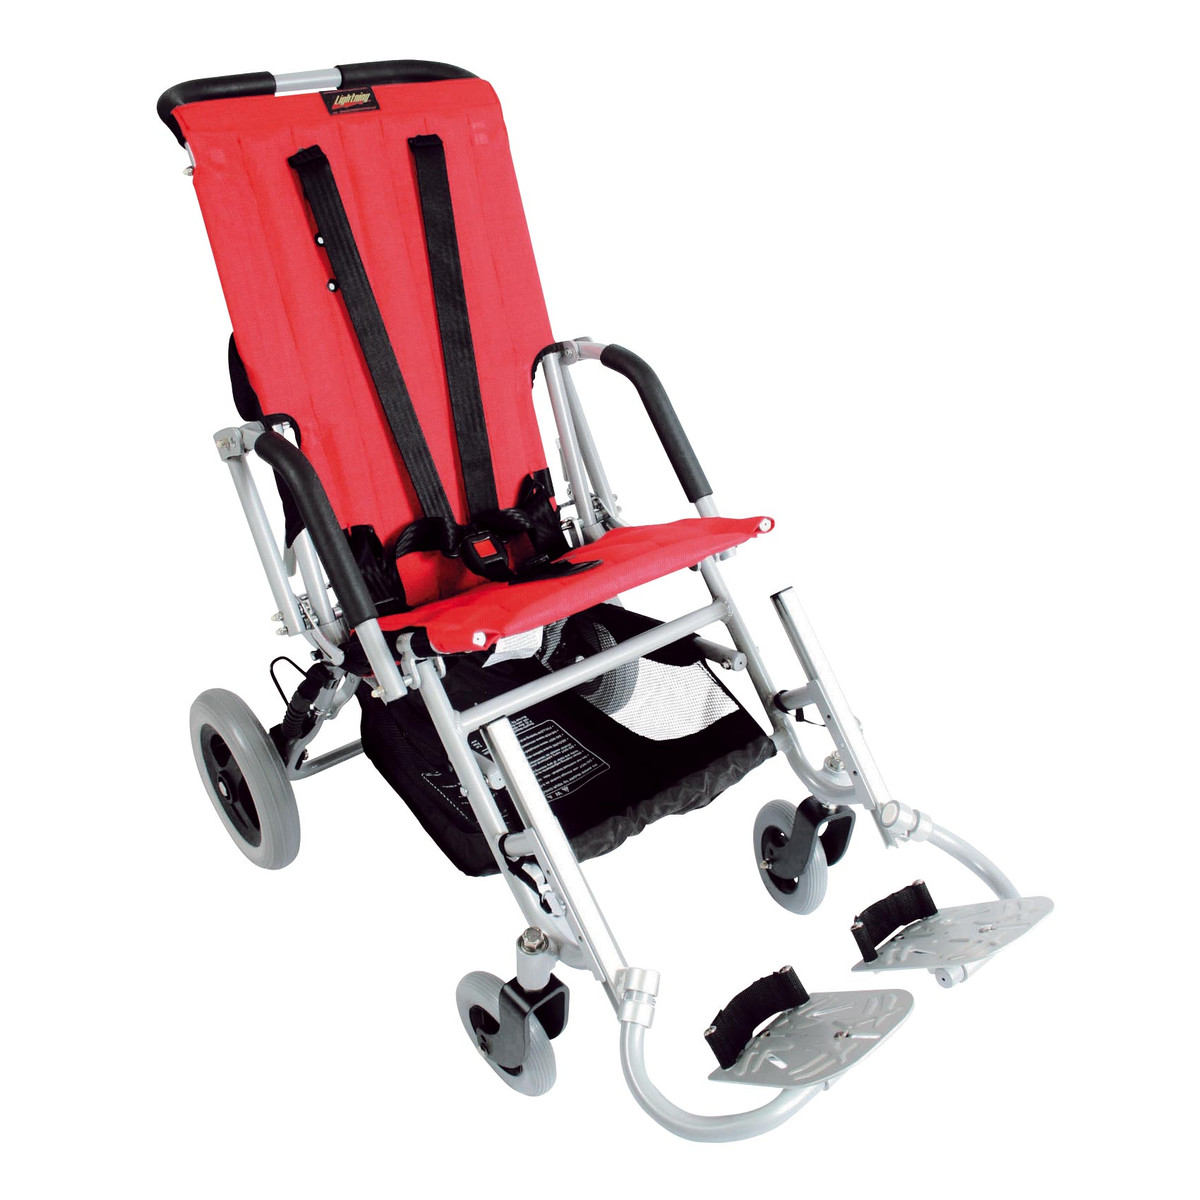 Convaid Crusier Lightweight Stroller